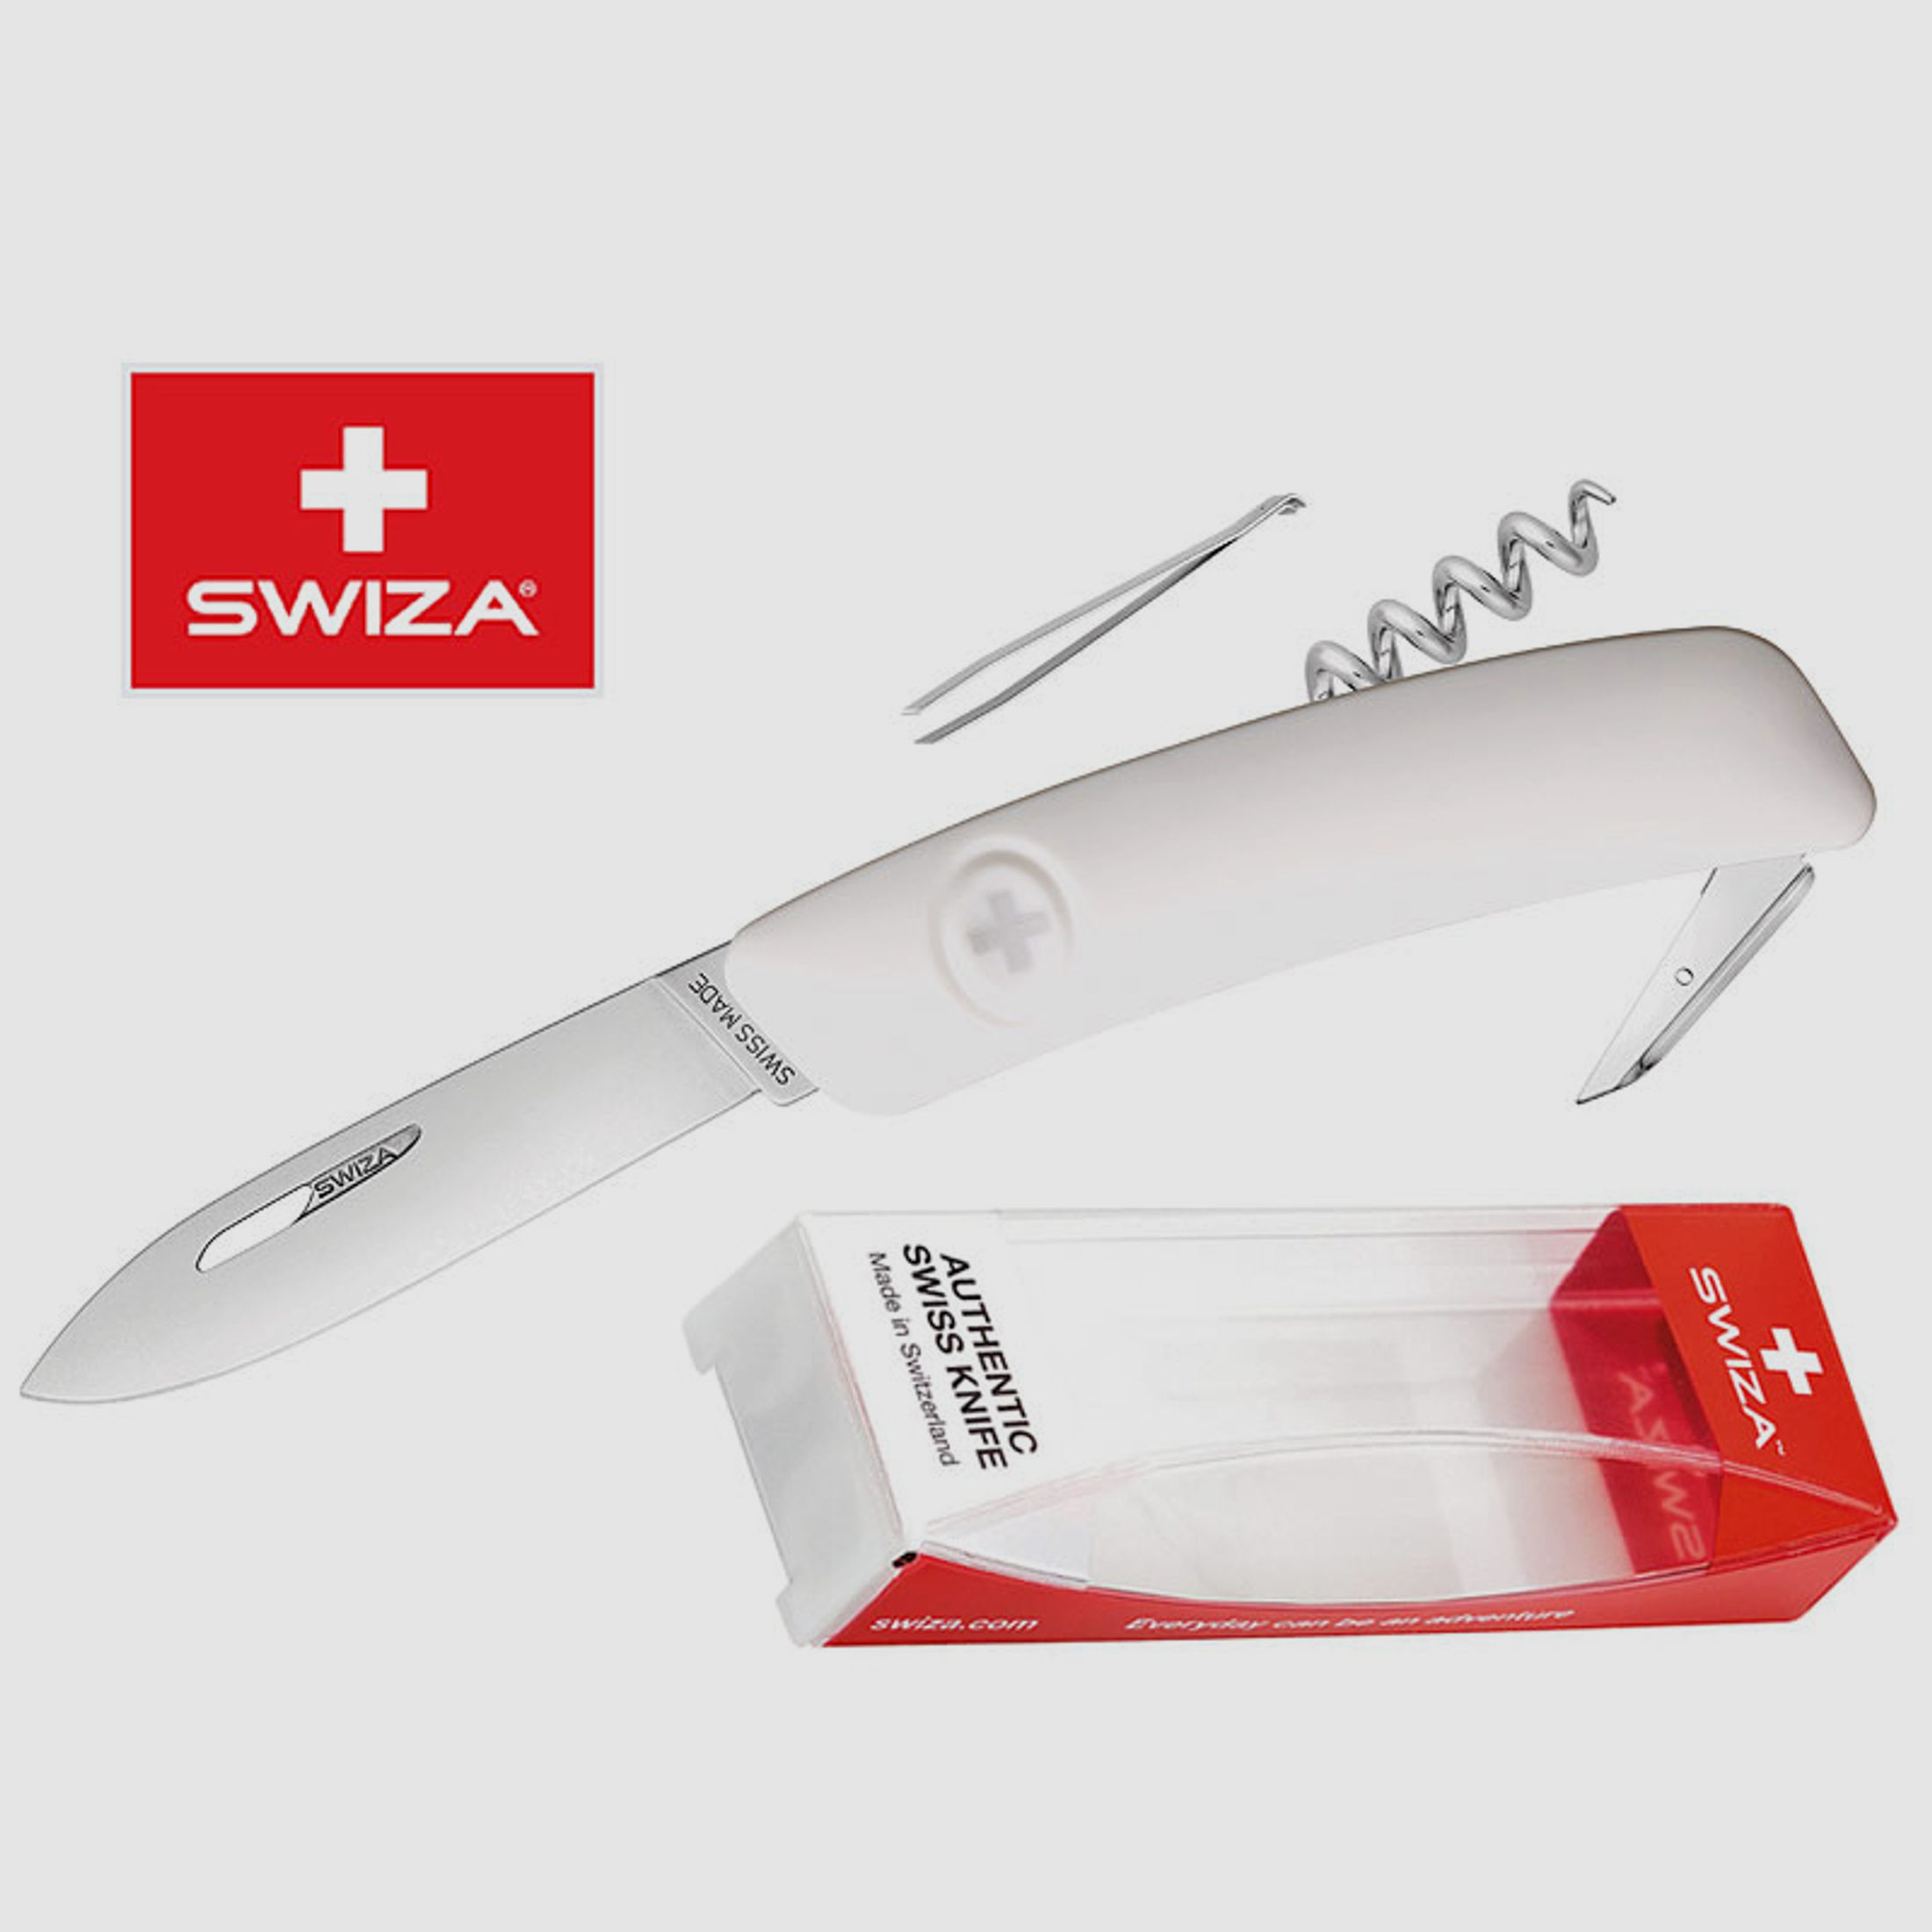 SWIZA Schweizer Messer D01, weiss, Edelstahl 440, 6 Funktionen, Korkenzieher, Multi-Tool